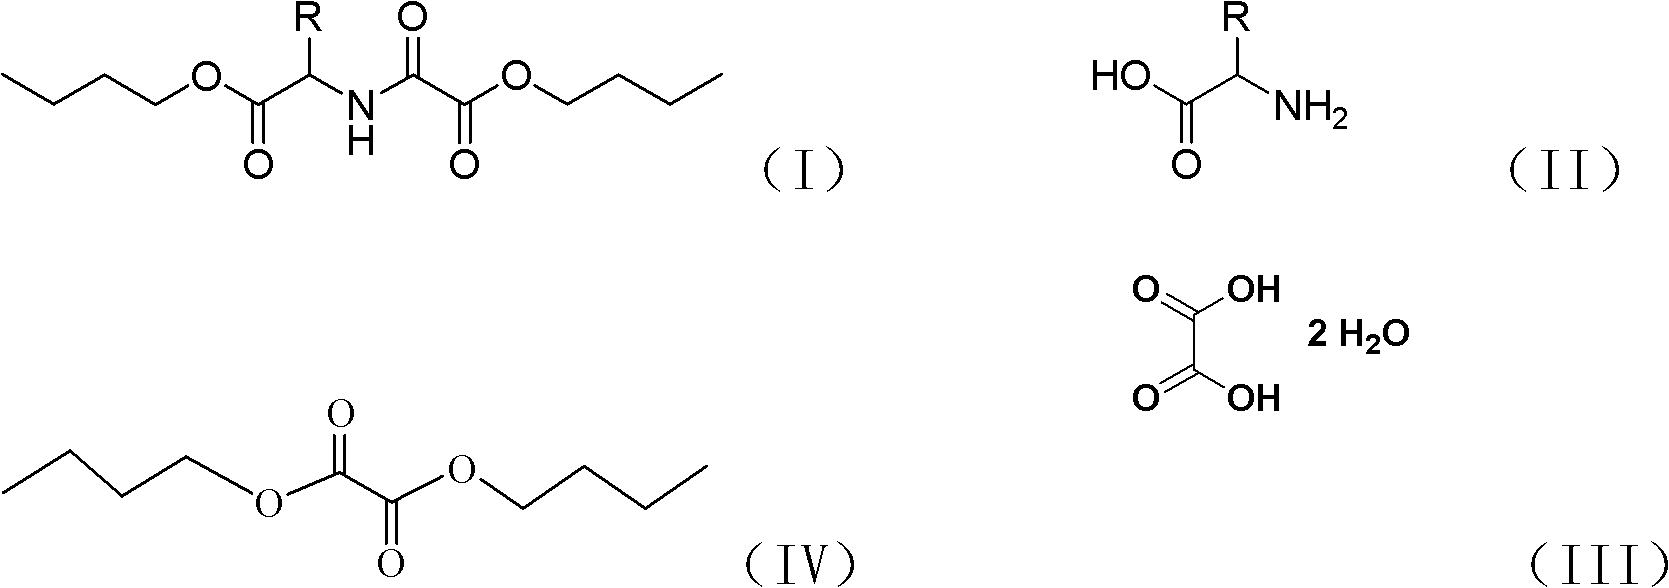 Chemical synthesis method of N-butoxyoxalyl amino acid butyl ester